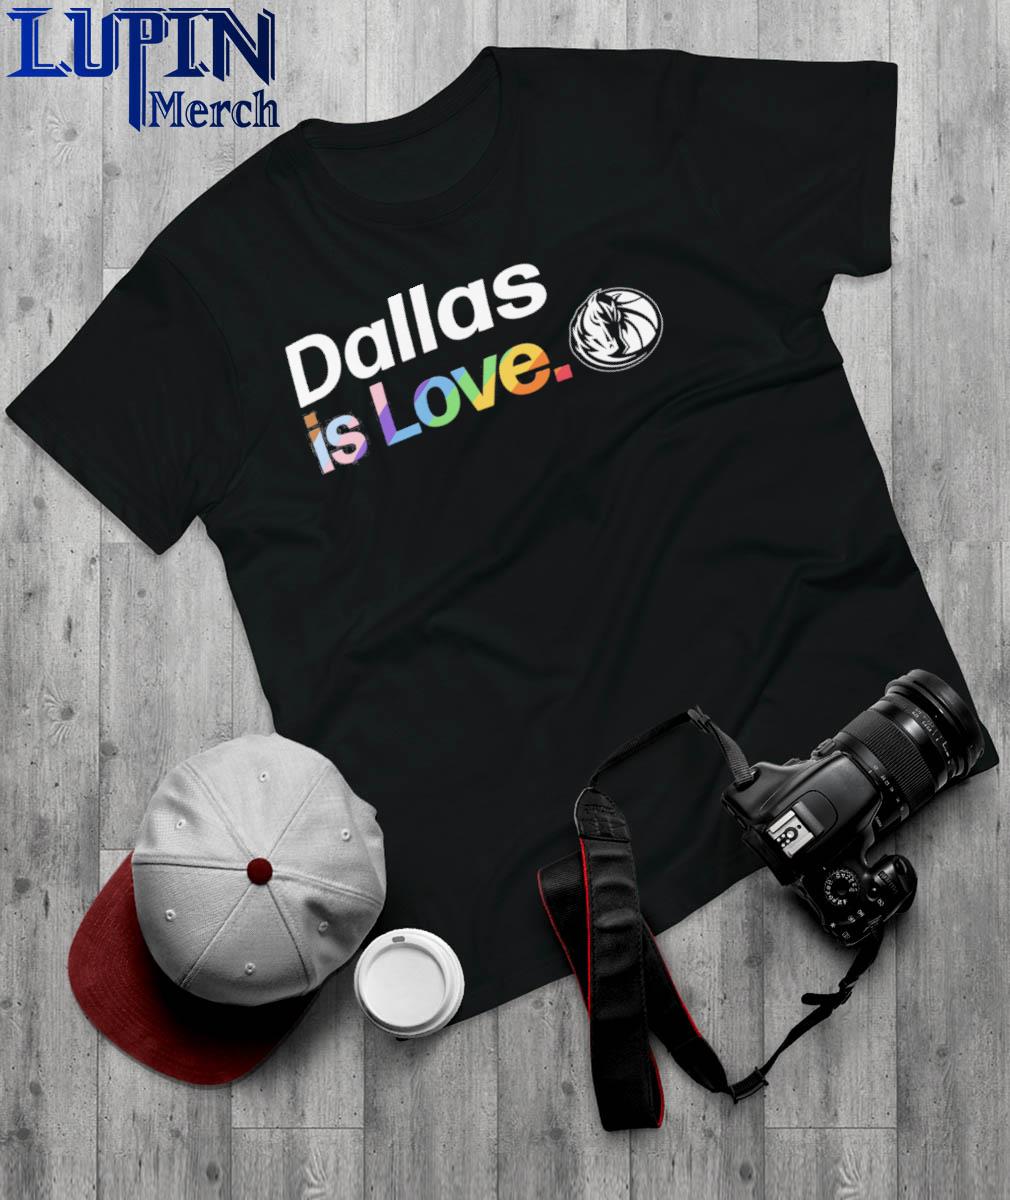 Official Dallas Mavericks shirt, hoodie, sweater, long sleeve and tank top